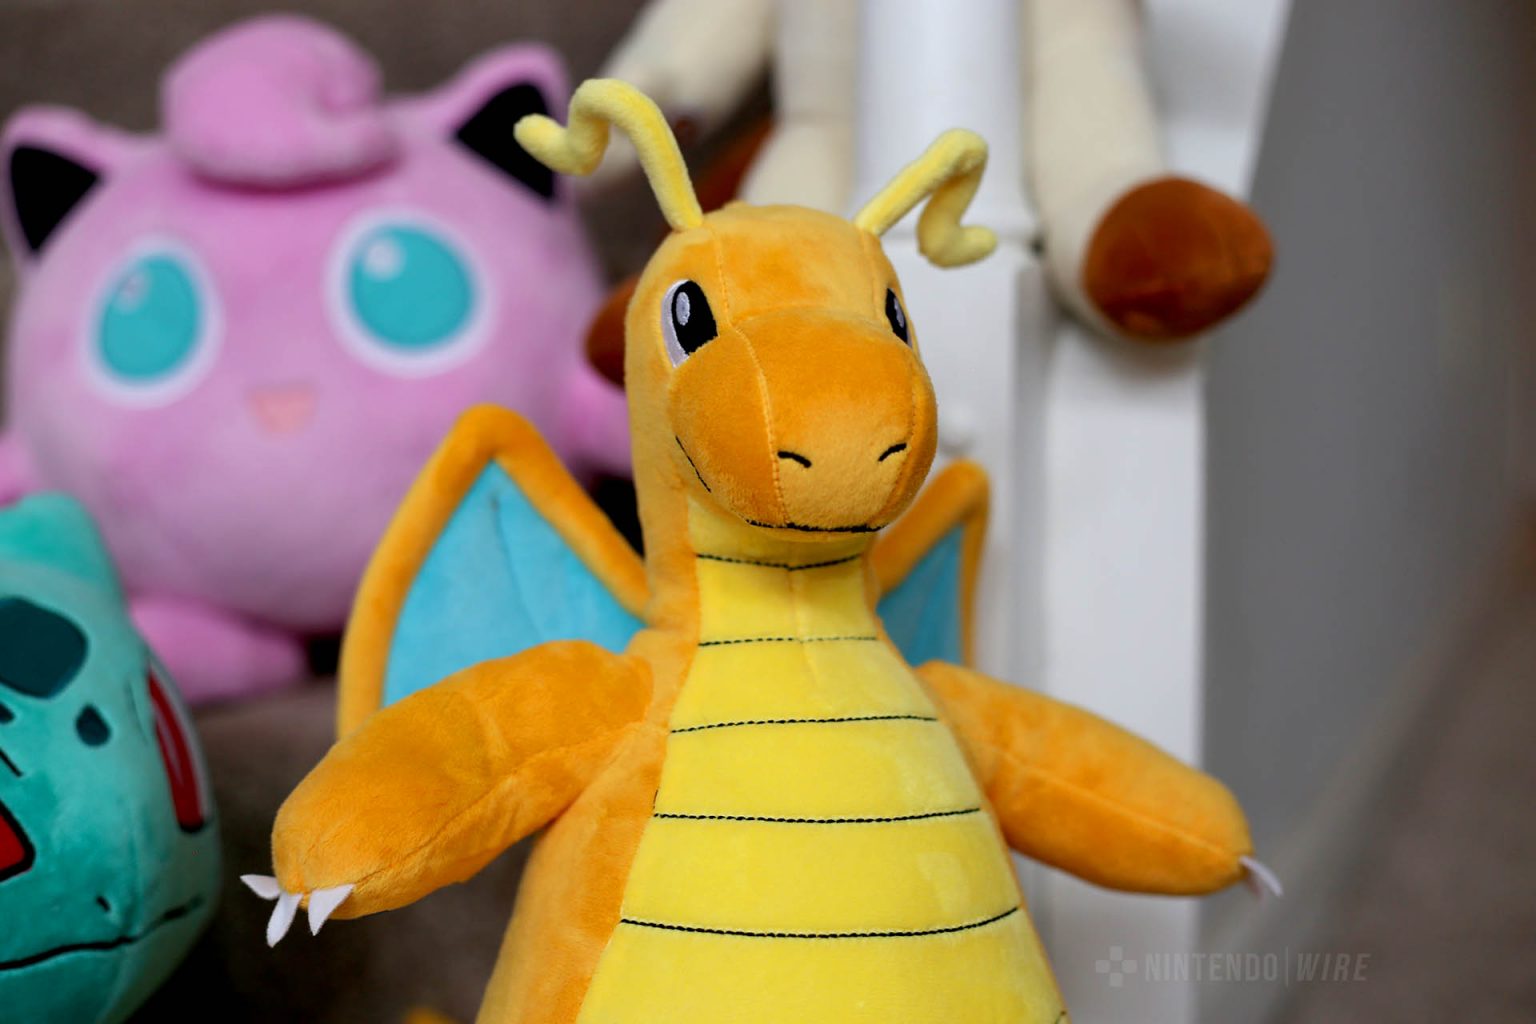 Gallery: Build-A-Bear's Dragonite plush is pure cuteness – Nintendo Wire